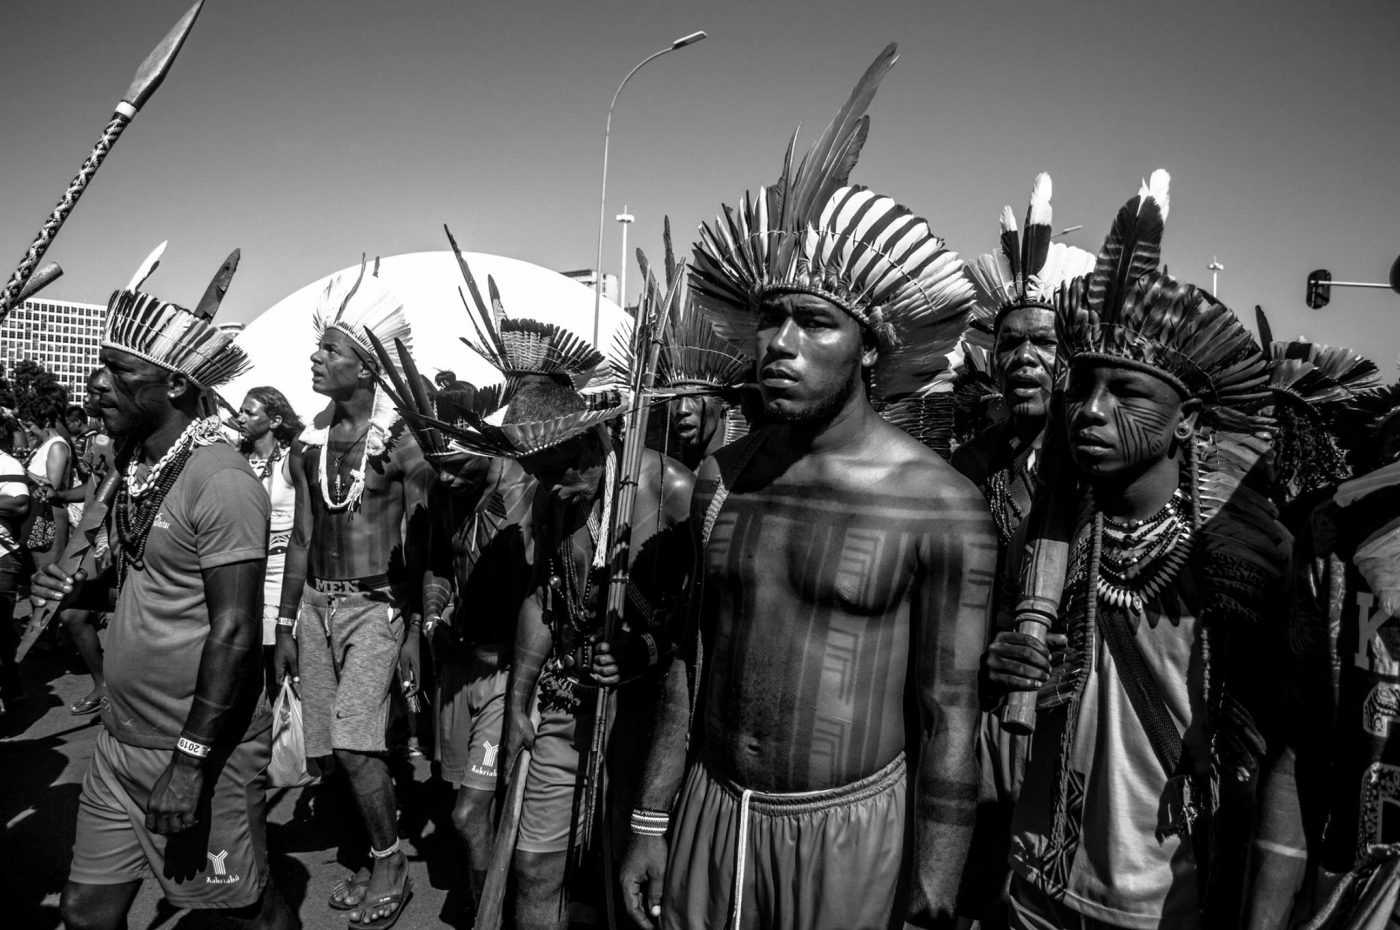 Xakriaba Free Land Camp Brazil Indigenous